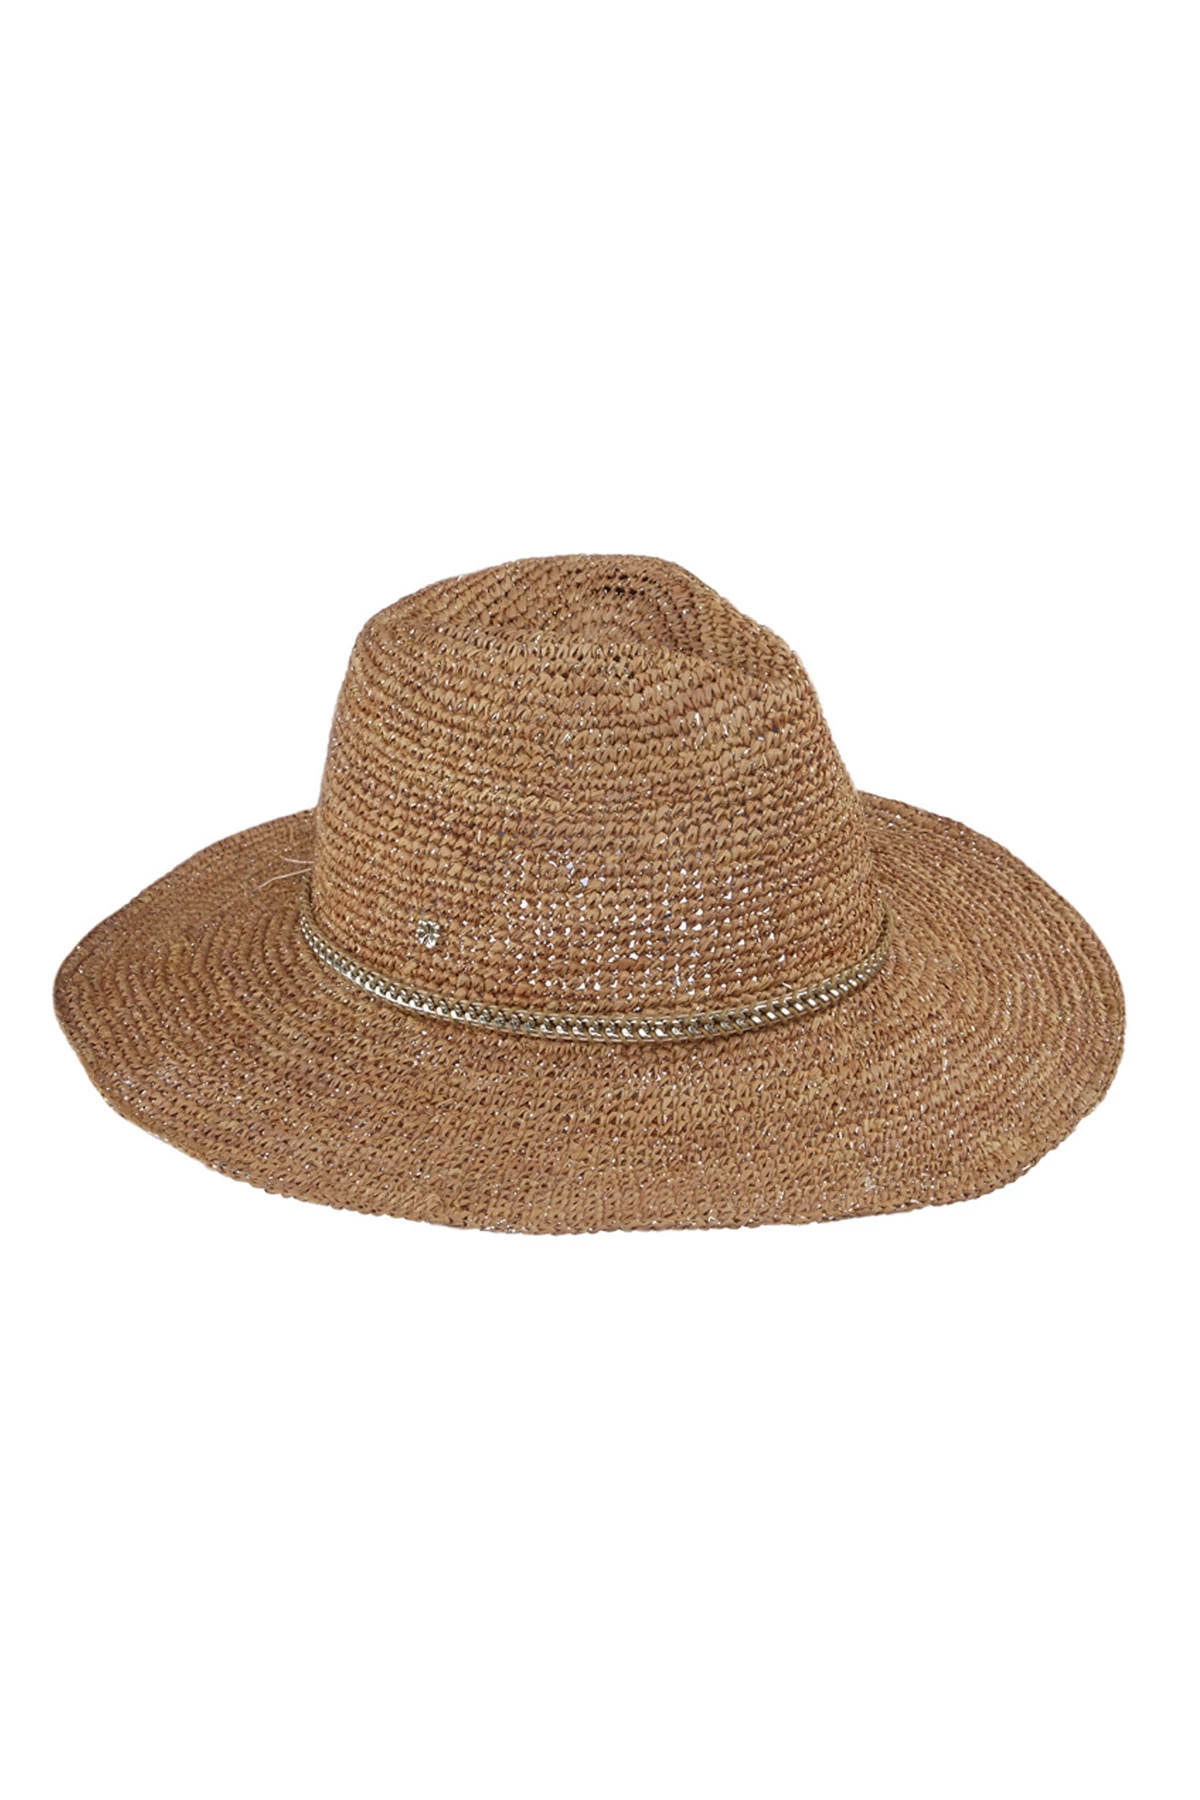 BURL/SILVER Dallas Large Brim Cowboy Hat image number 1